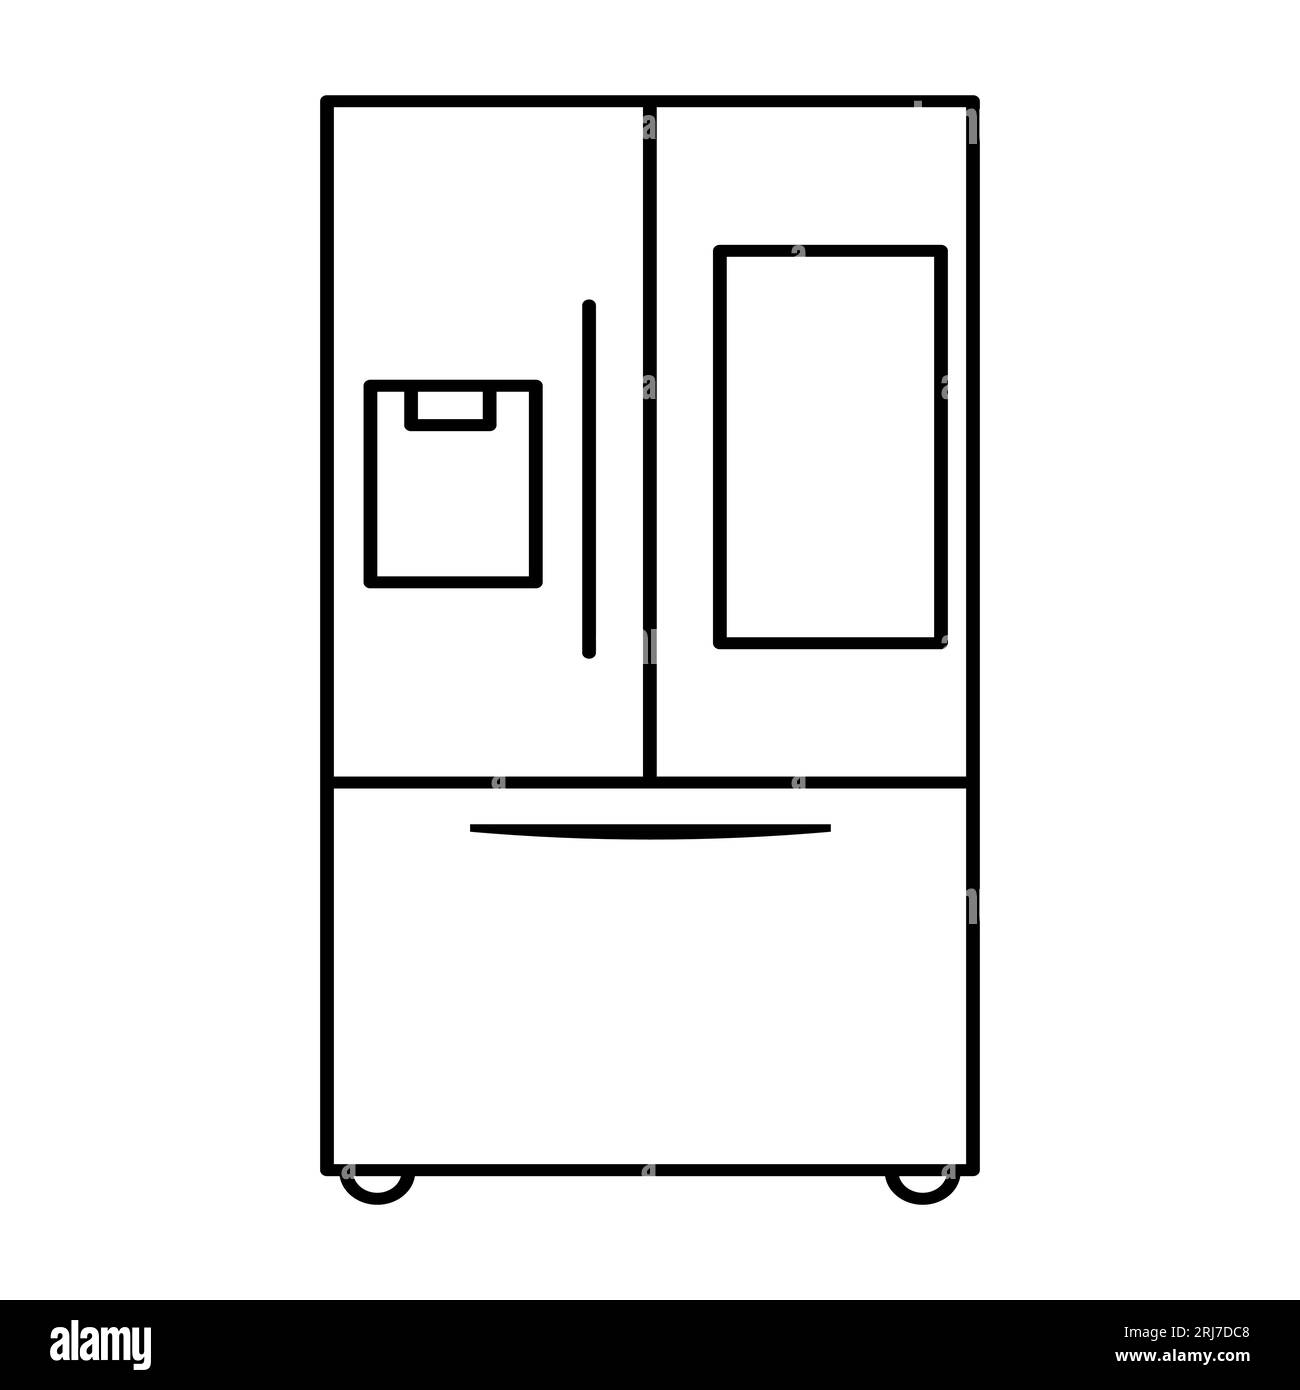 Fridge line icon. Freezer storage, refrigerator sign. Vector illustration Stock Vector